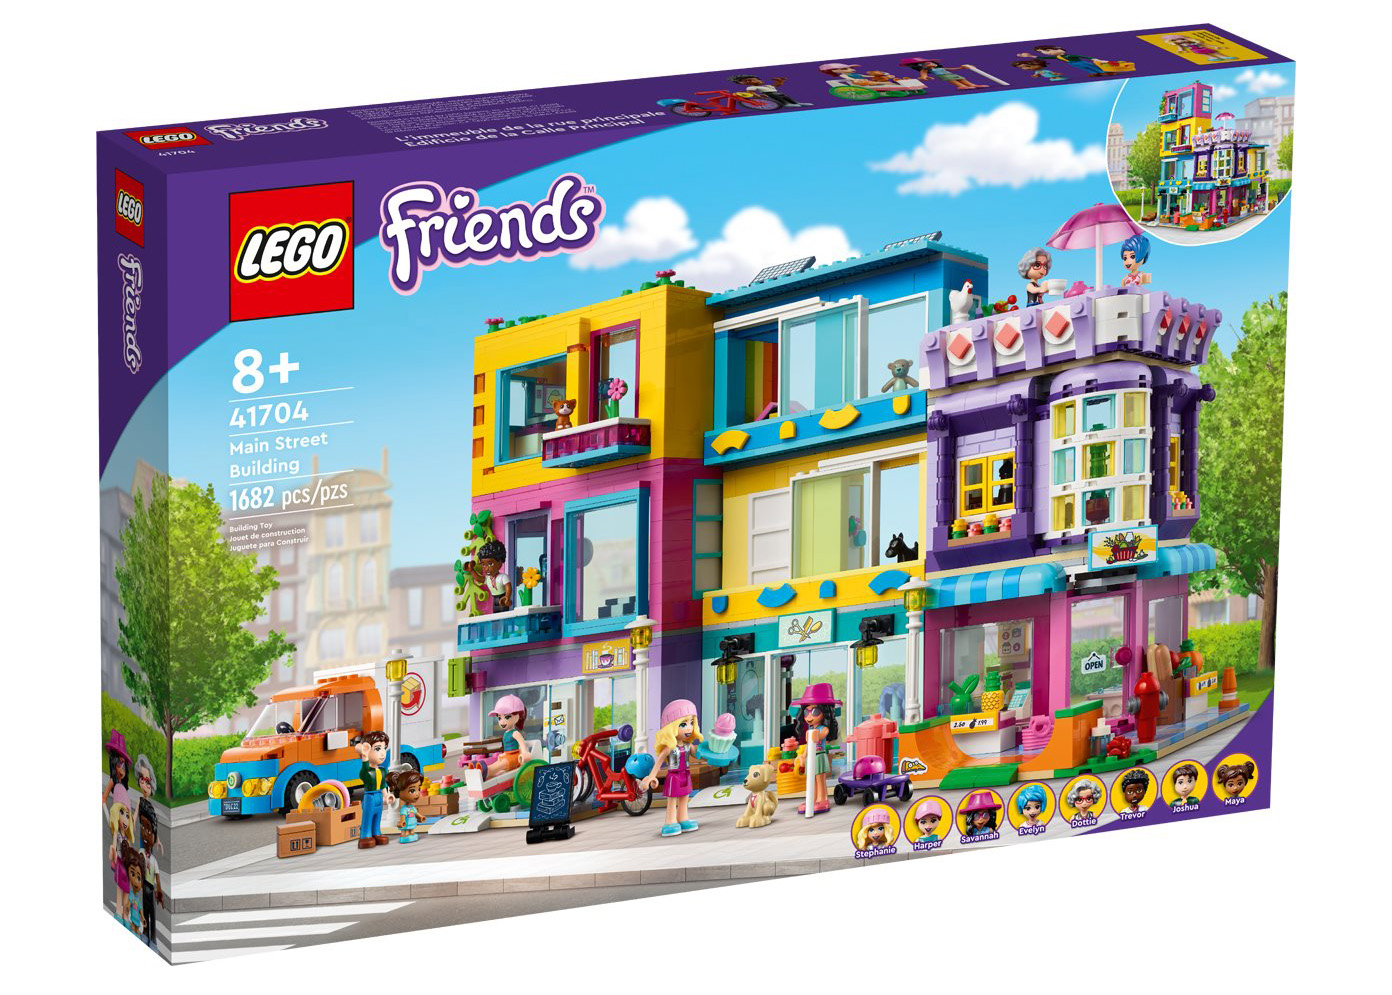 LEGO Friends Main Street Building Set 41704 - SS22 - US